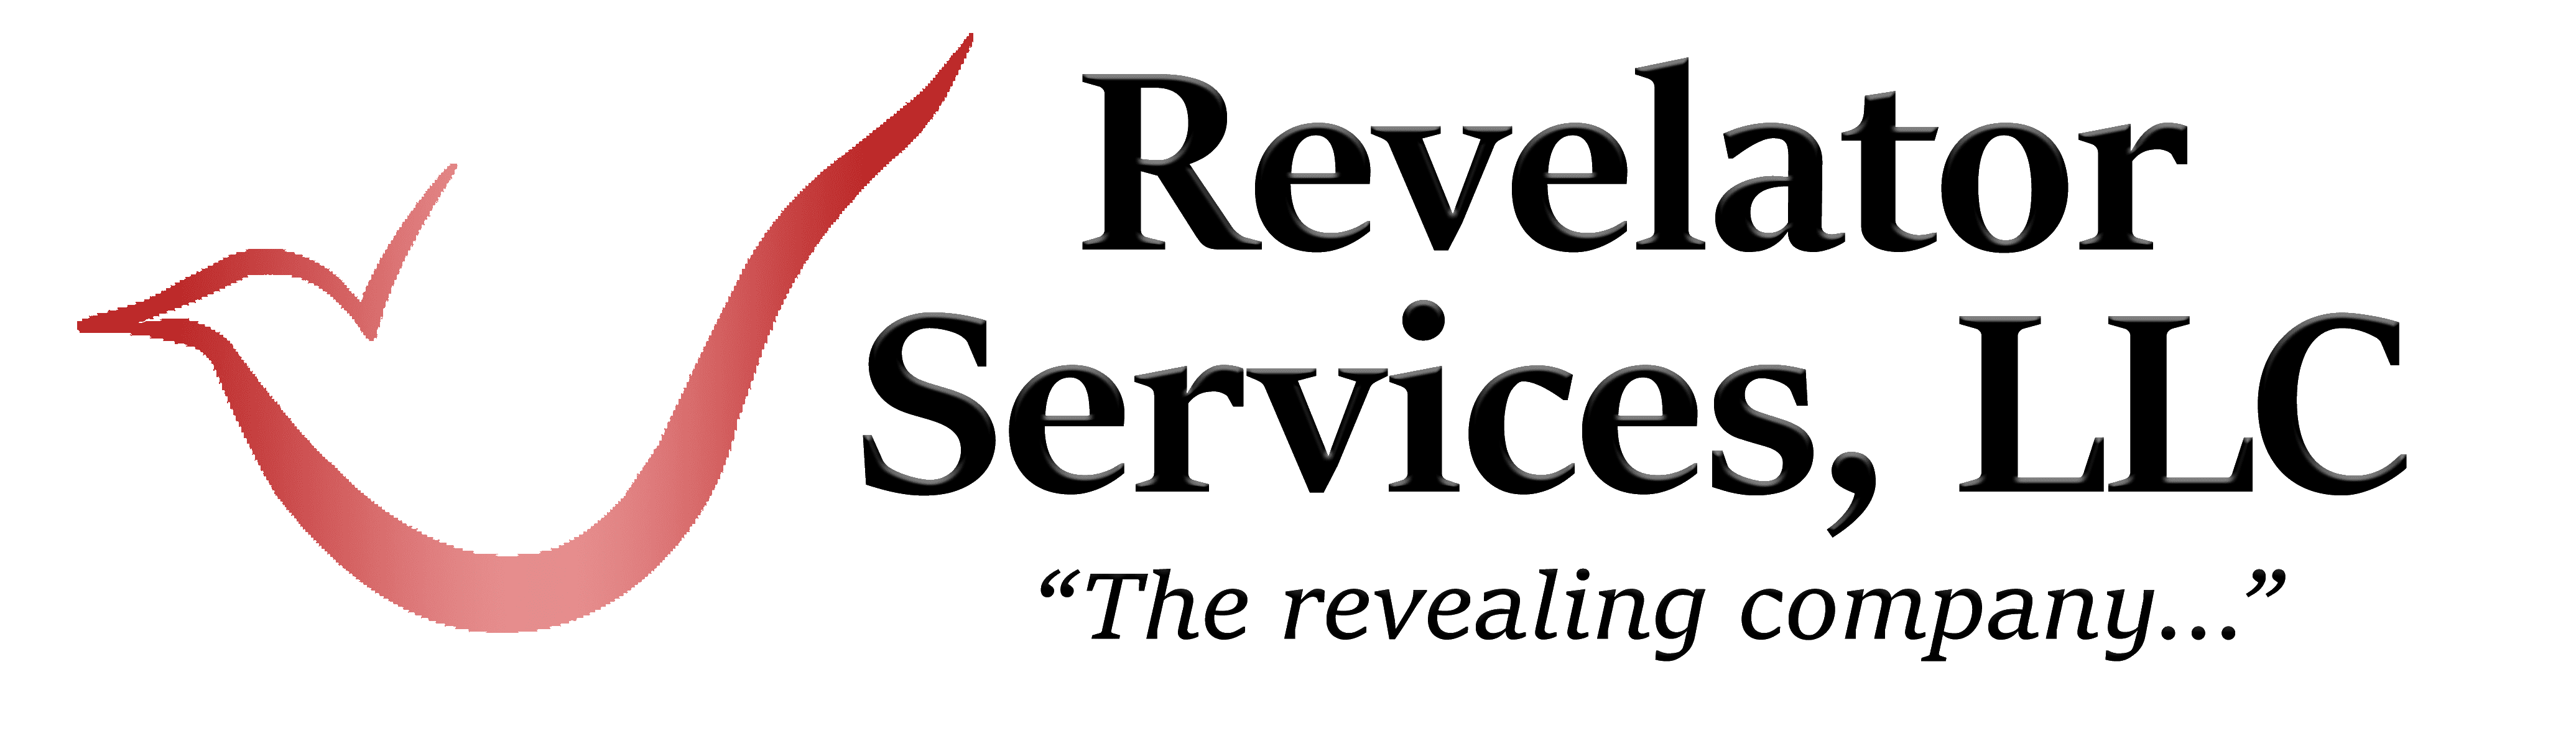 revelator services logo